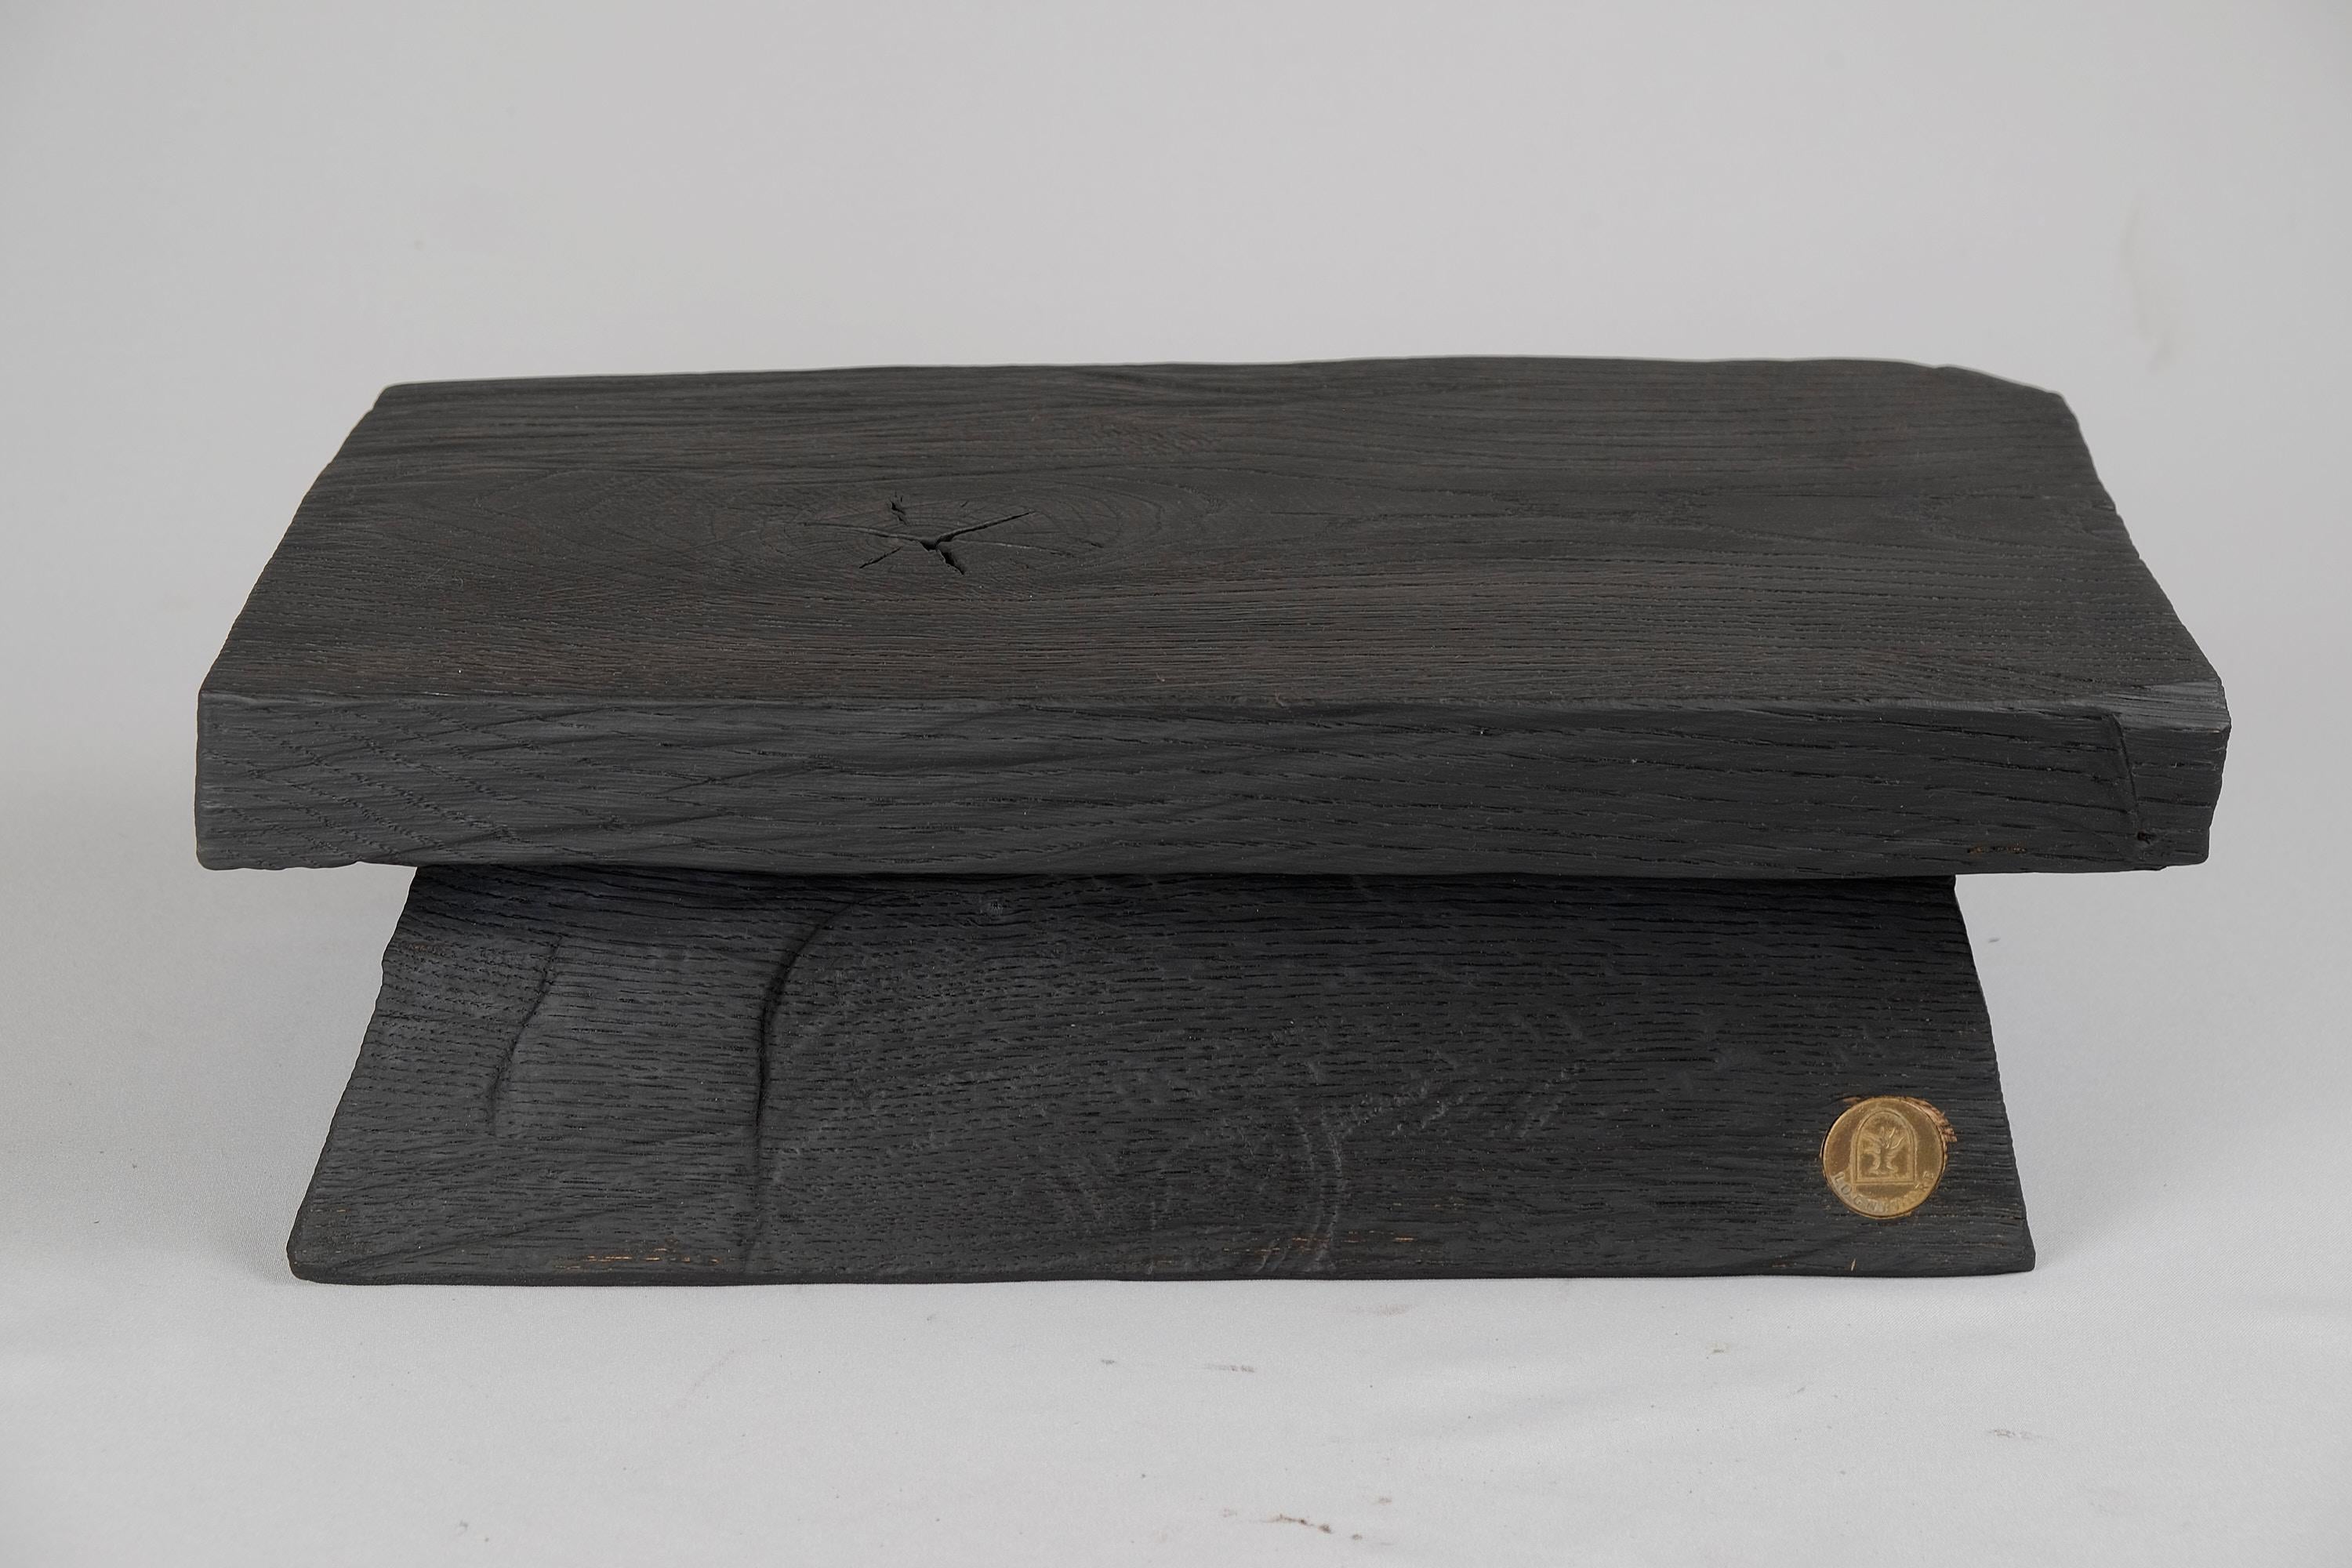 Croatian Solid Burnt Wood, Side Table, Stool, Original Contemporary Design